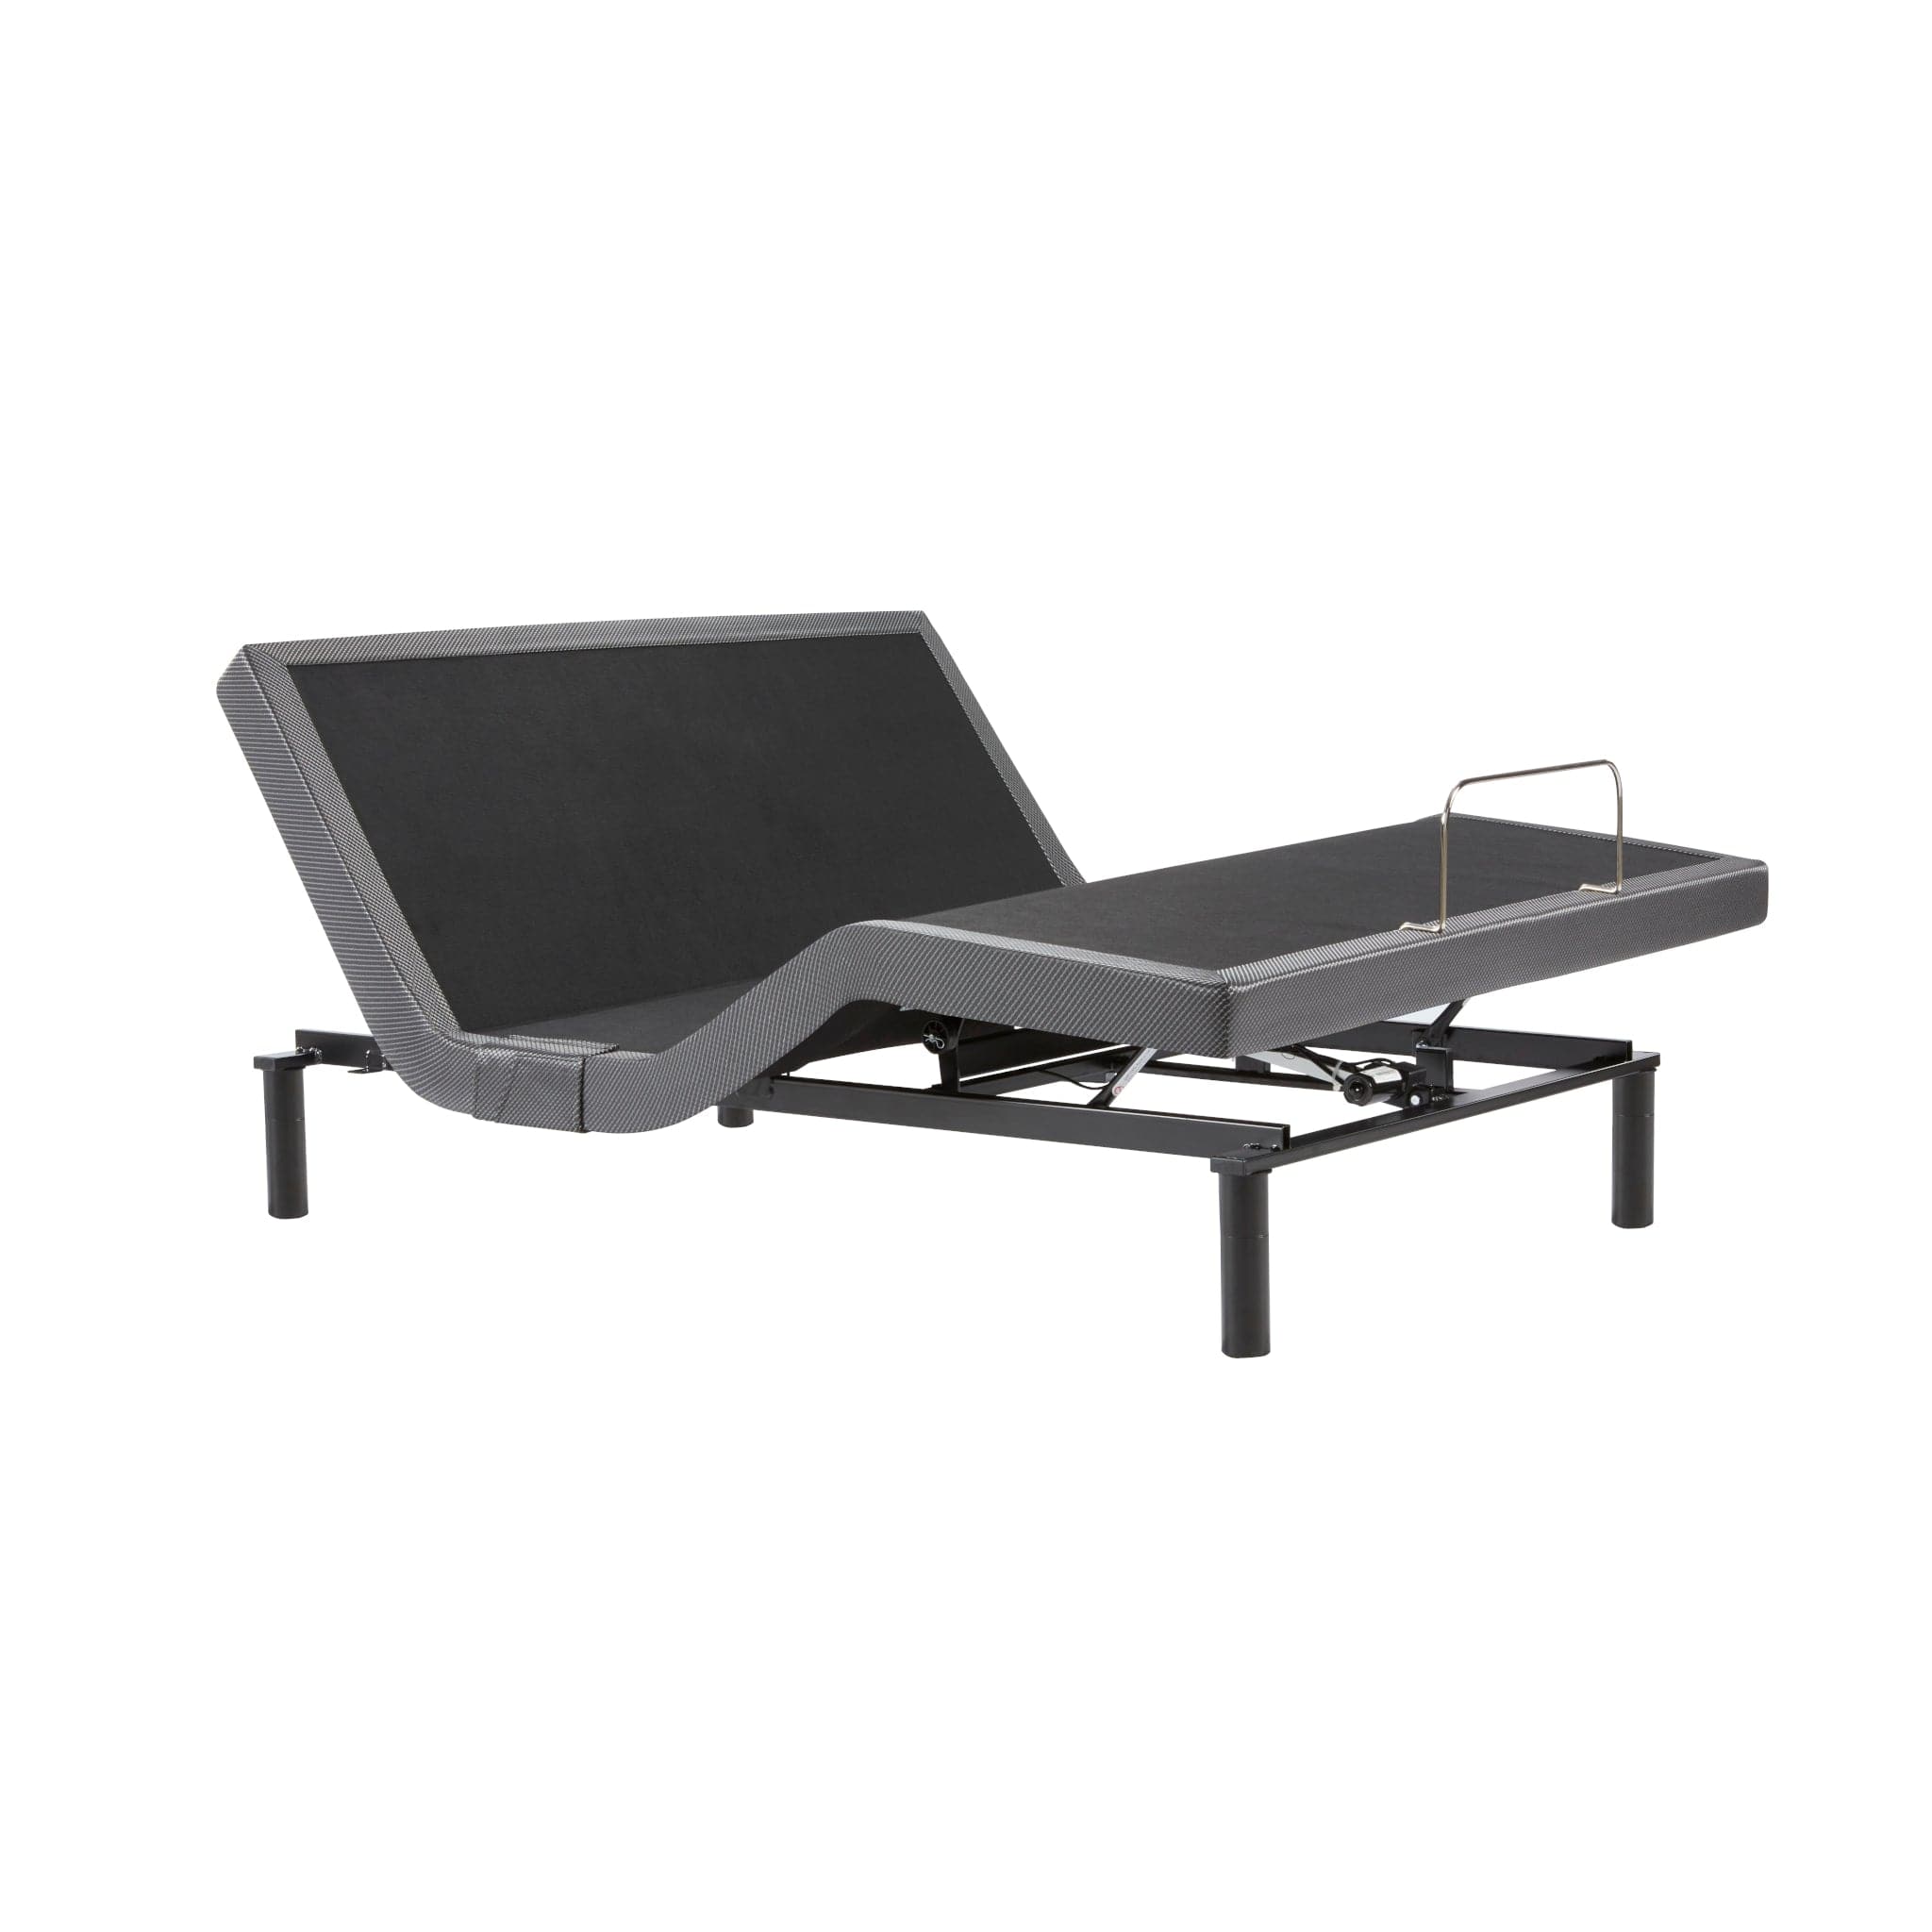 Beautyrest Advanced Motion Adjustable Bed